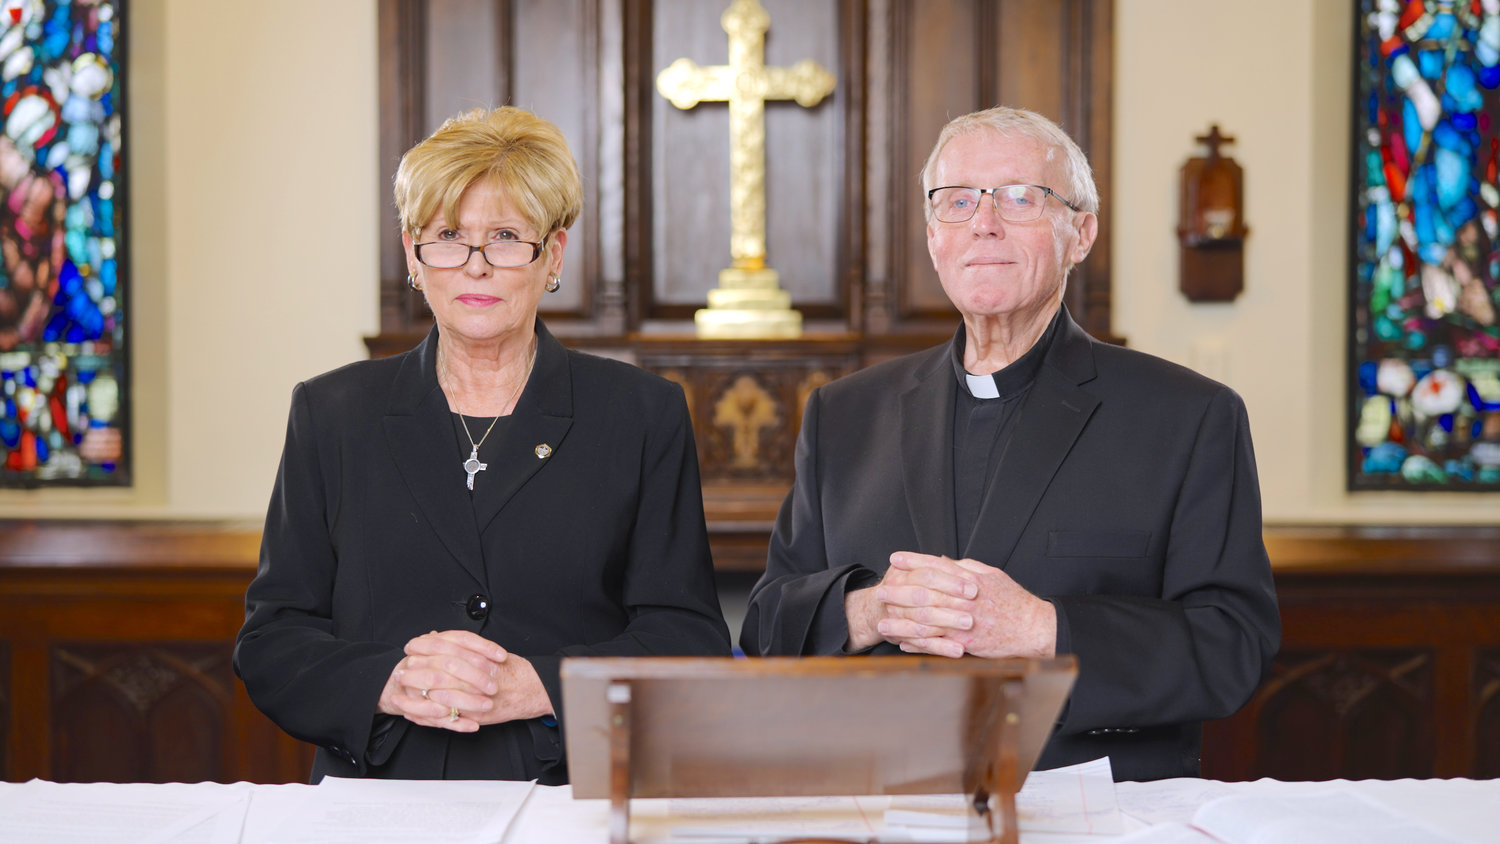 “The Journey-Shepherding God’s People” program hosts the Rev. Carol Jubenville, left, and Father John Buehler.